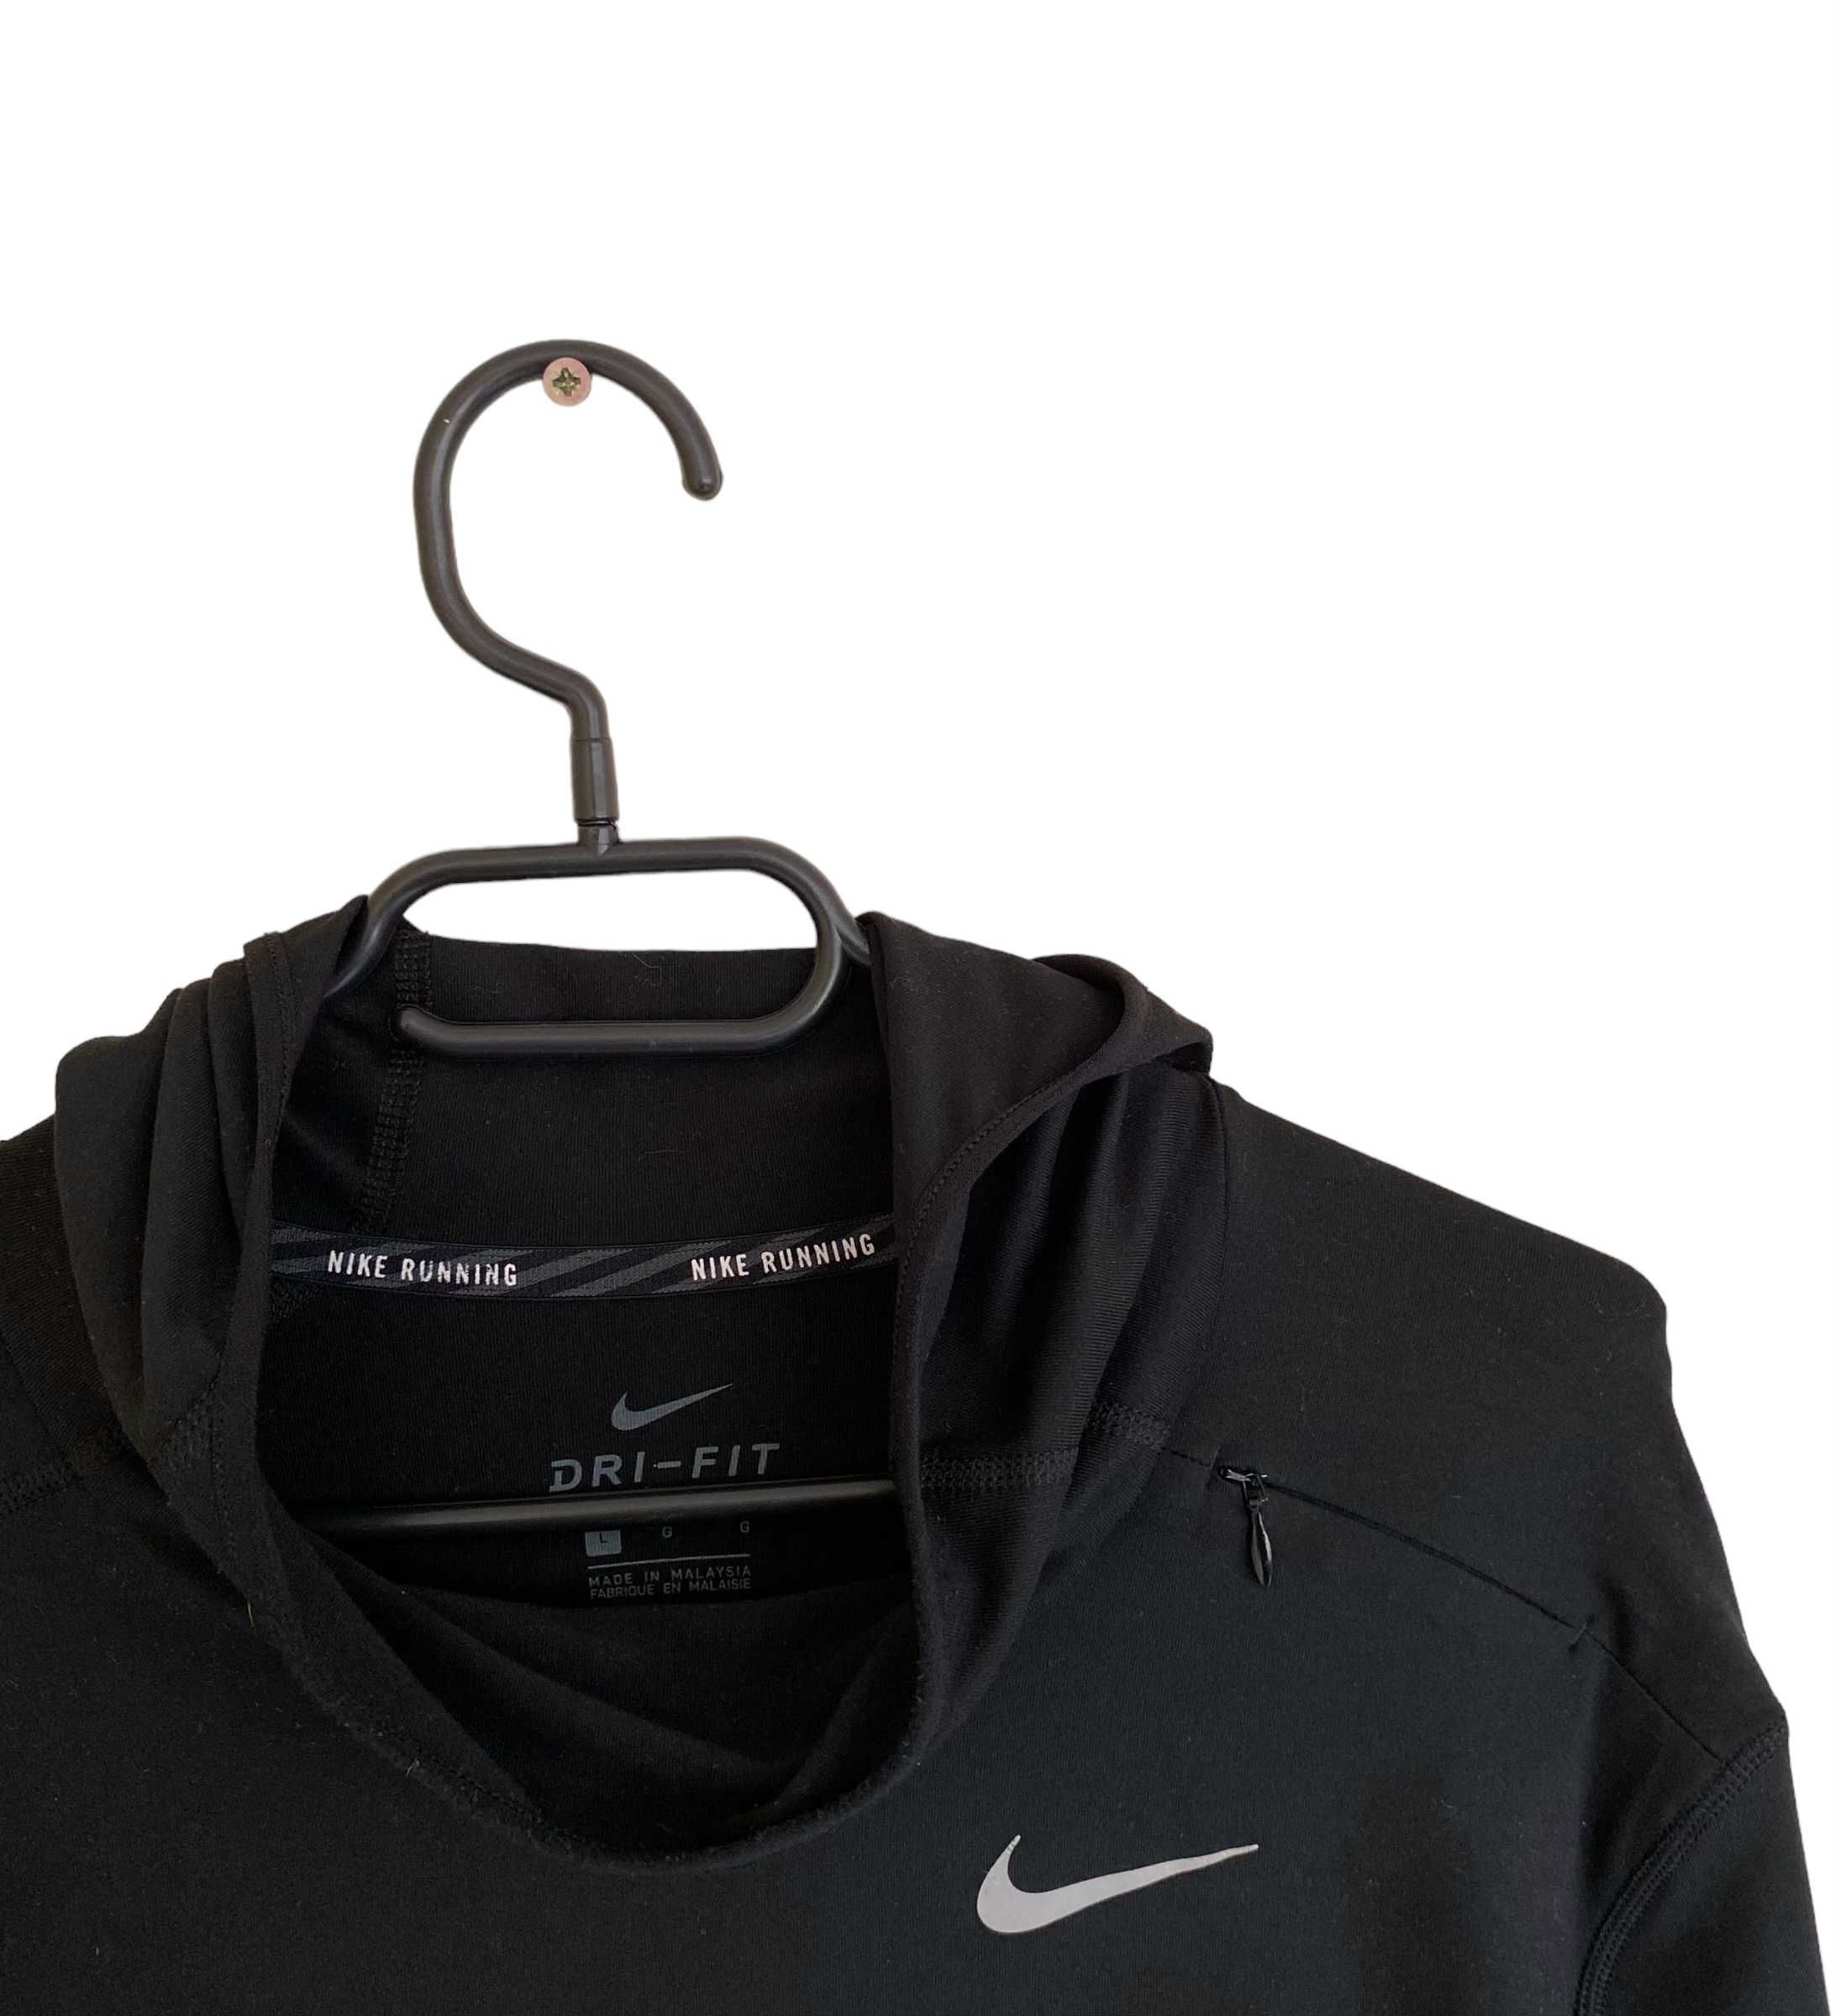 Nike Running bluza z kominem, rozmiar L, stan bardzo dobry